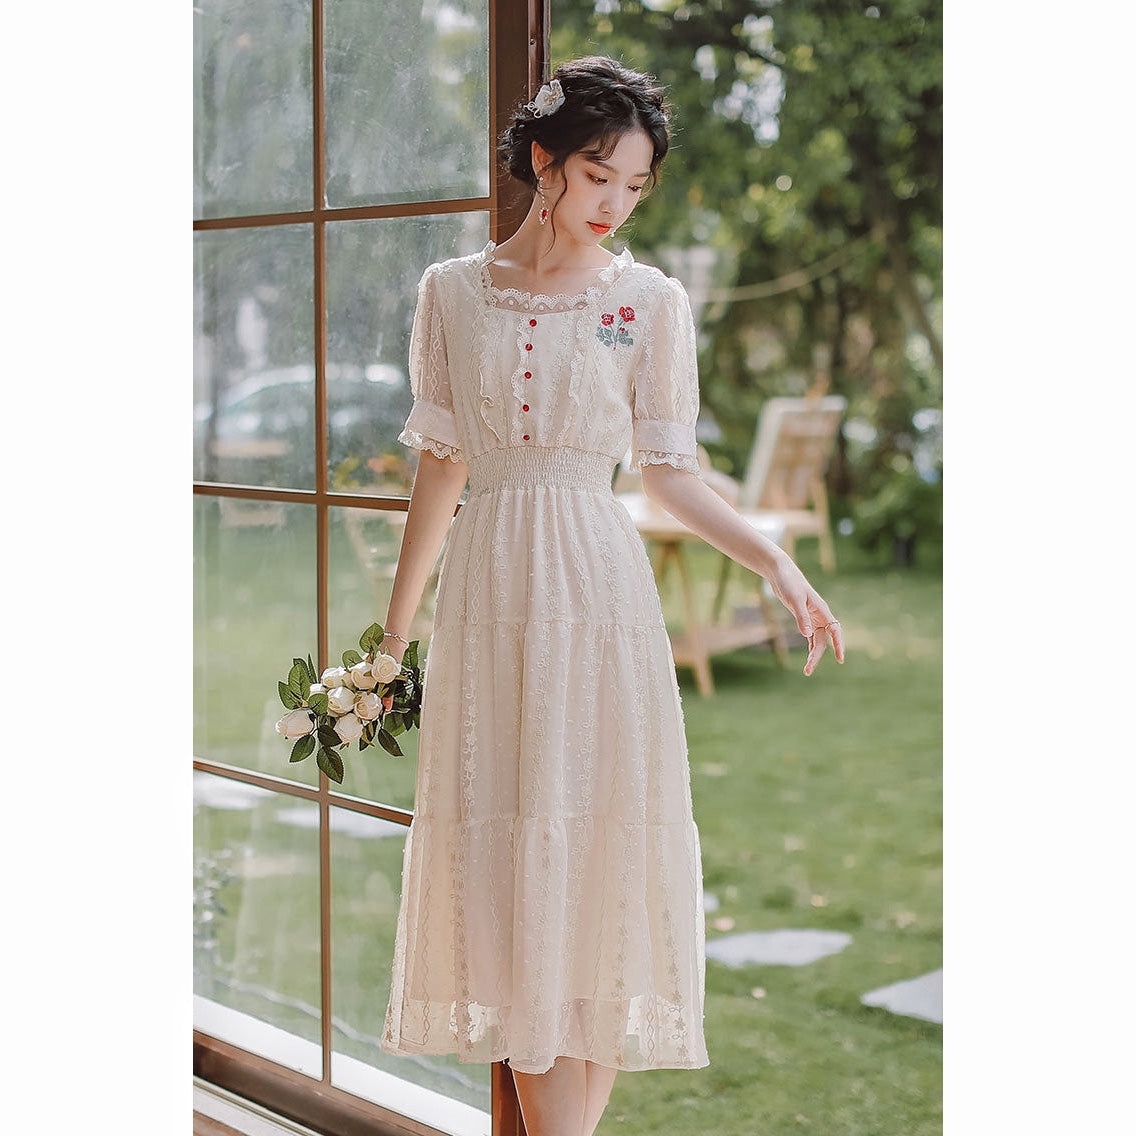 Rose Vintage style Cottagecore Dress | Cottagecore Dress